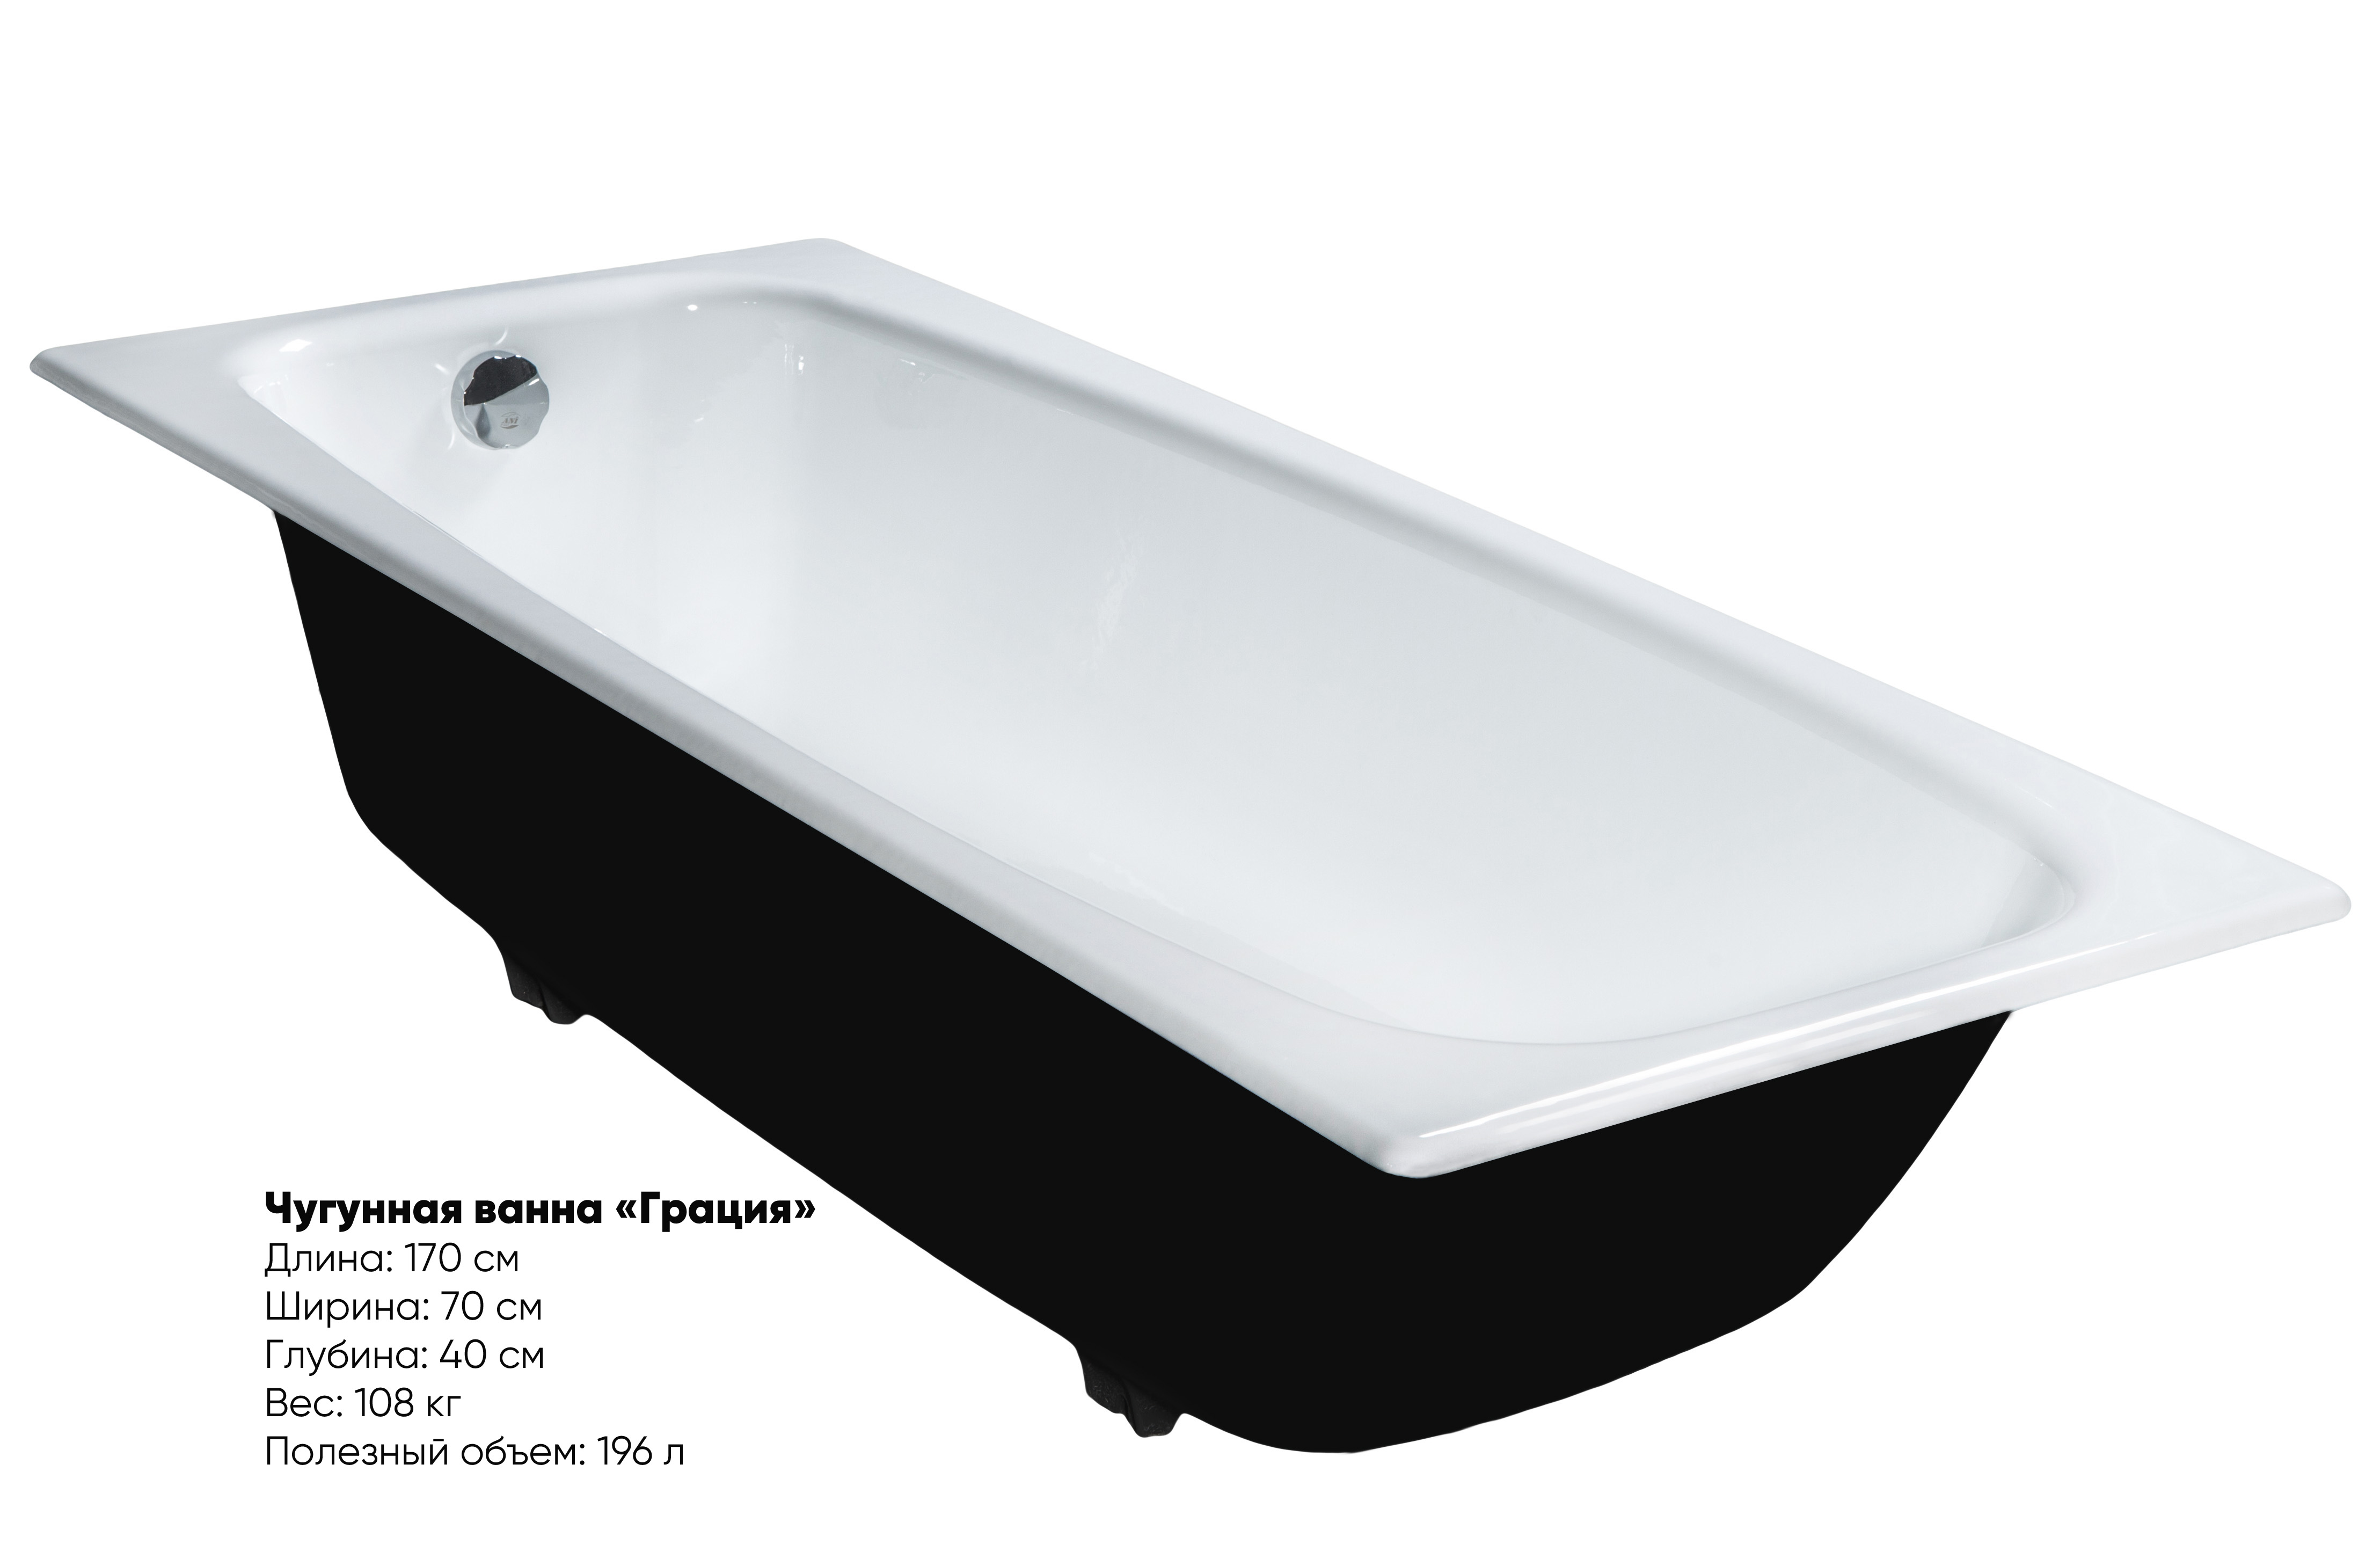 Чугунная ванна Грация 170x70, параметры, вид сбоку, Завод Универсал